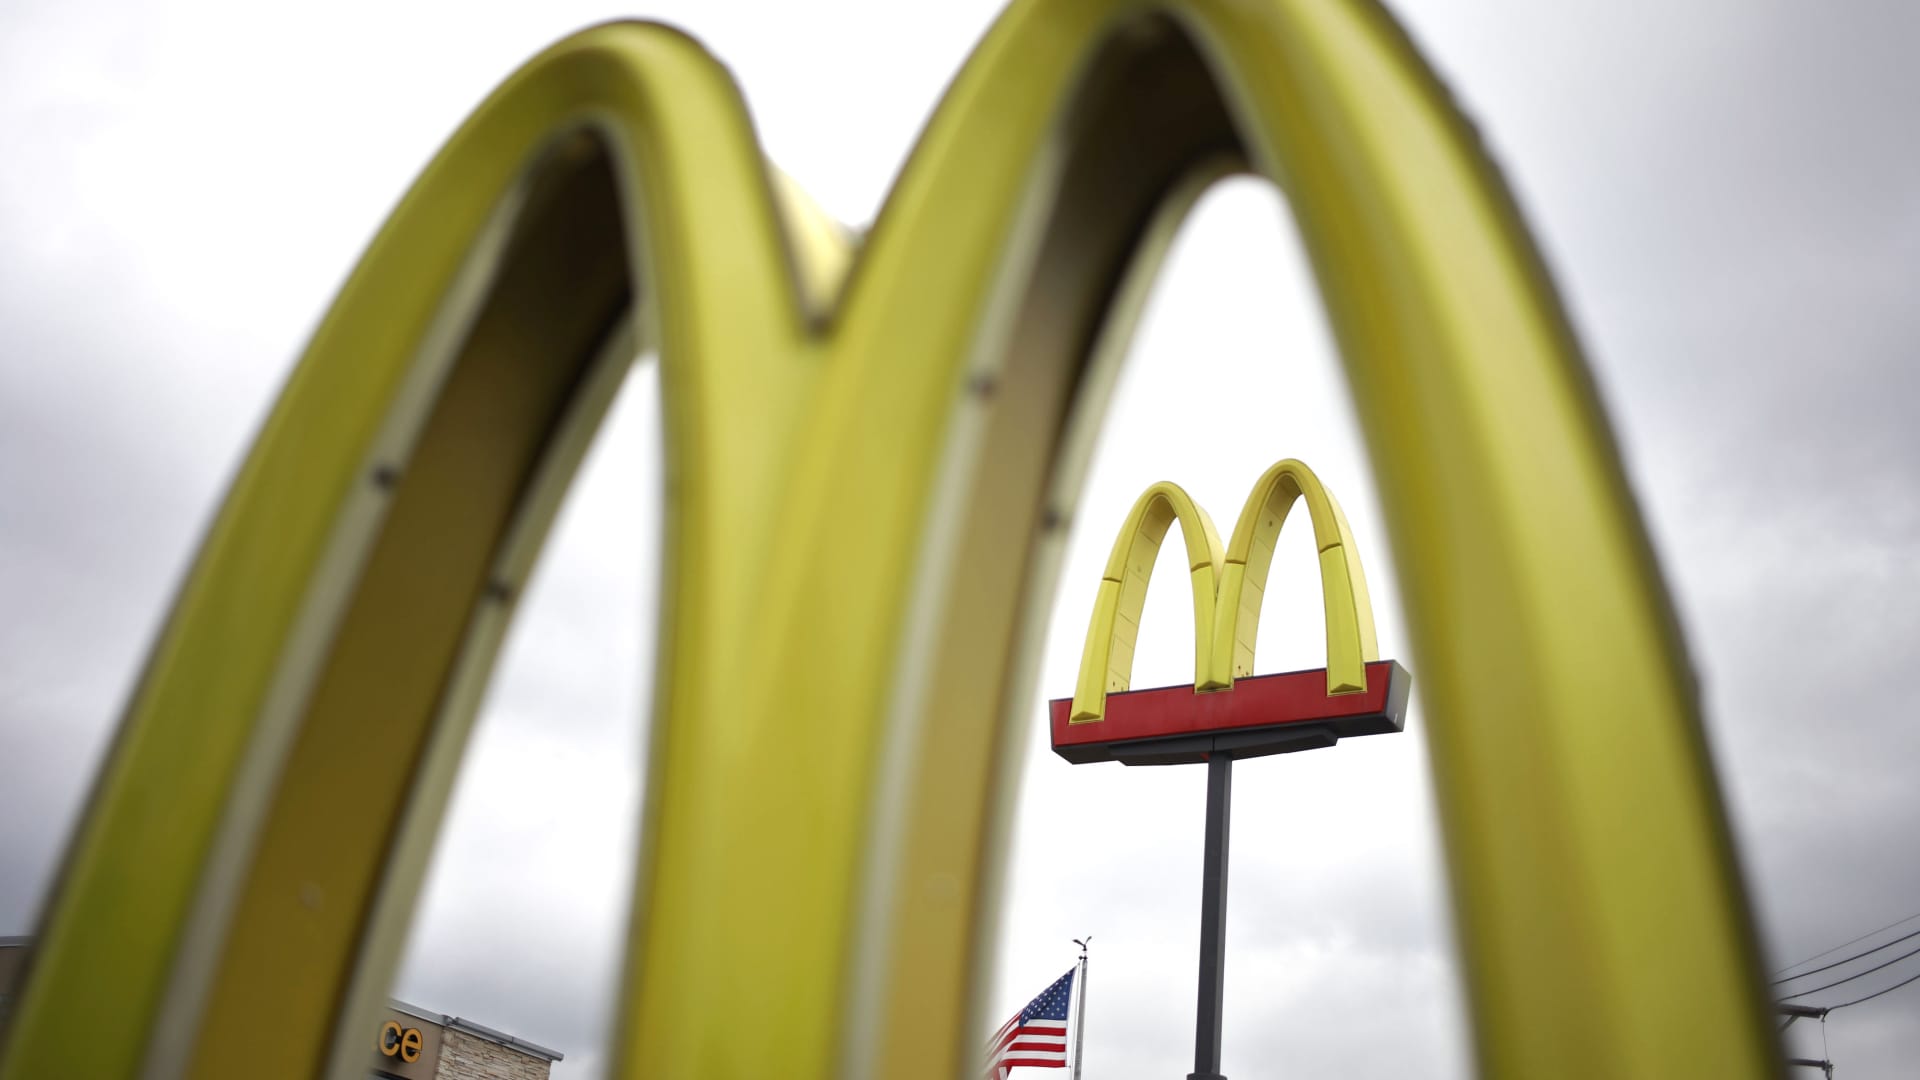 McDonald’s shareholders vote on Carl Icahn proxy fight over animal welfare